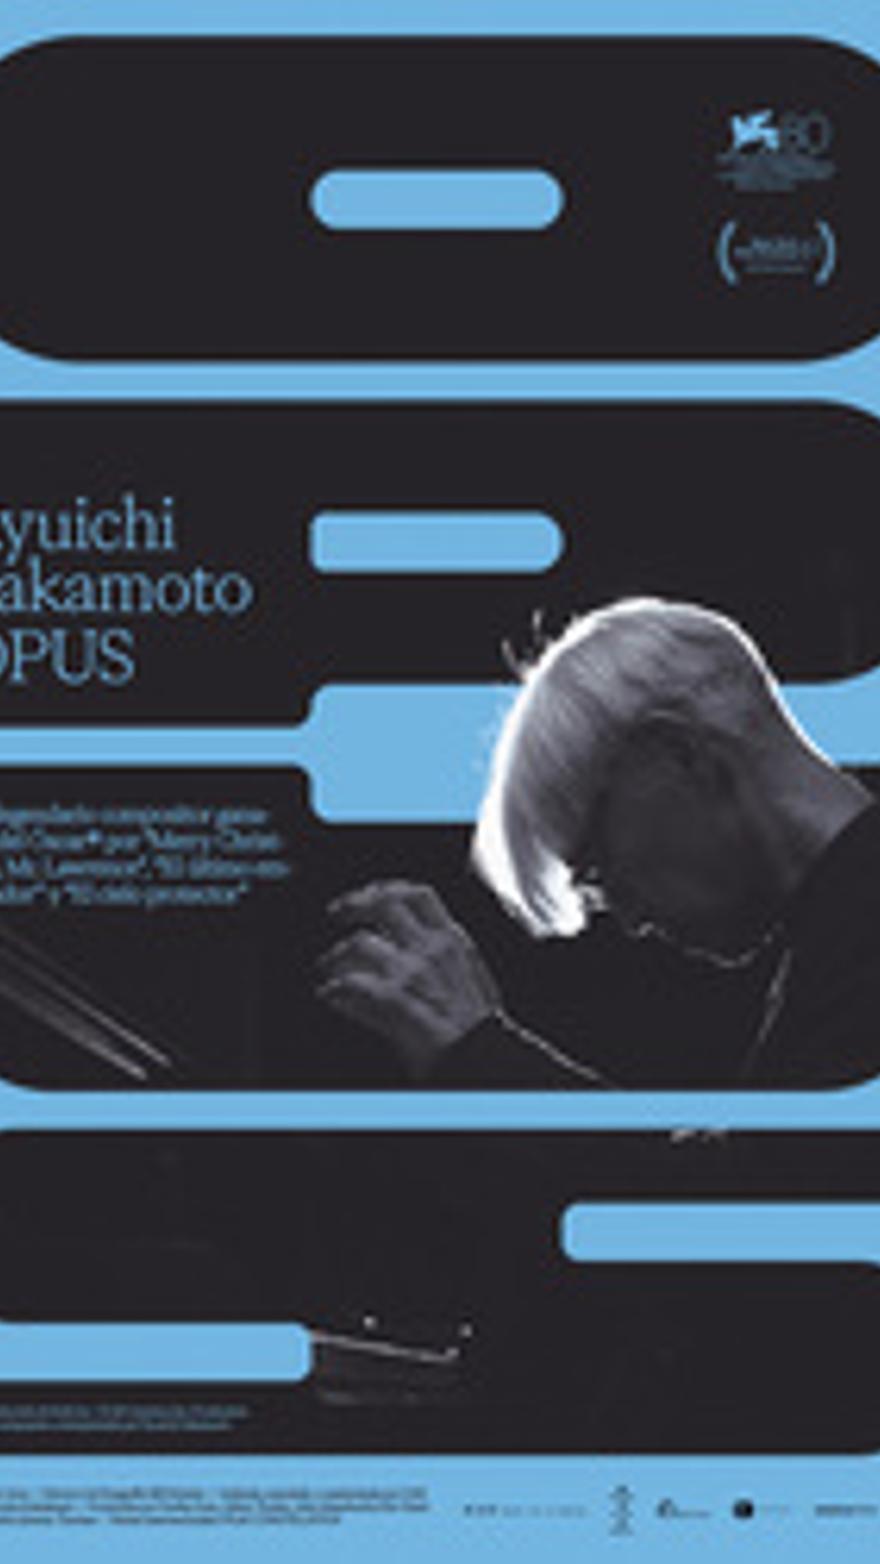 Ryuichi Sakamoto: Opus V.O.S.E.